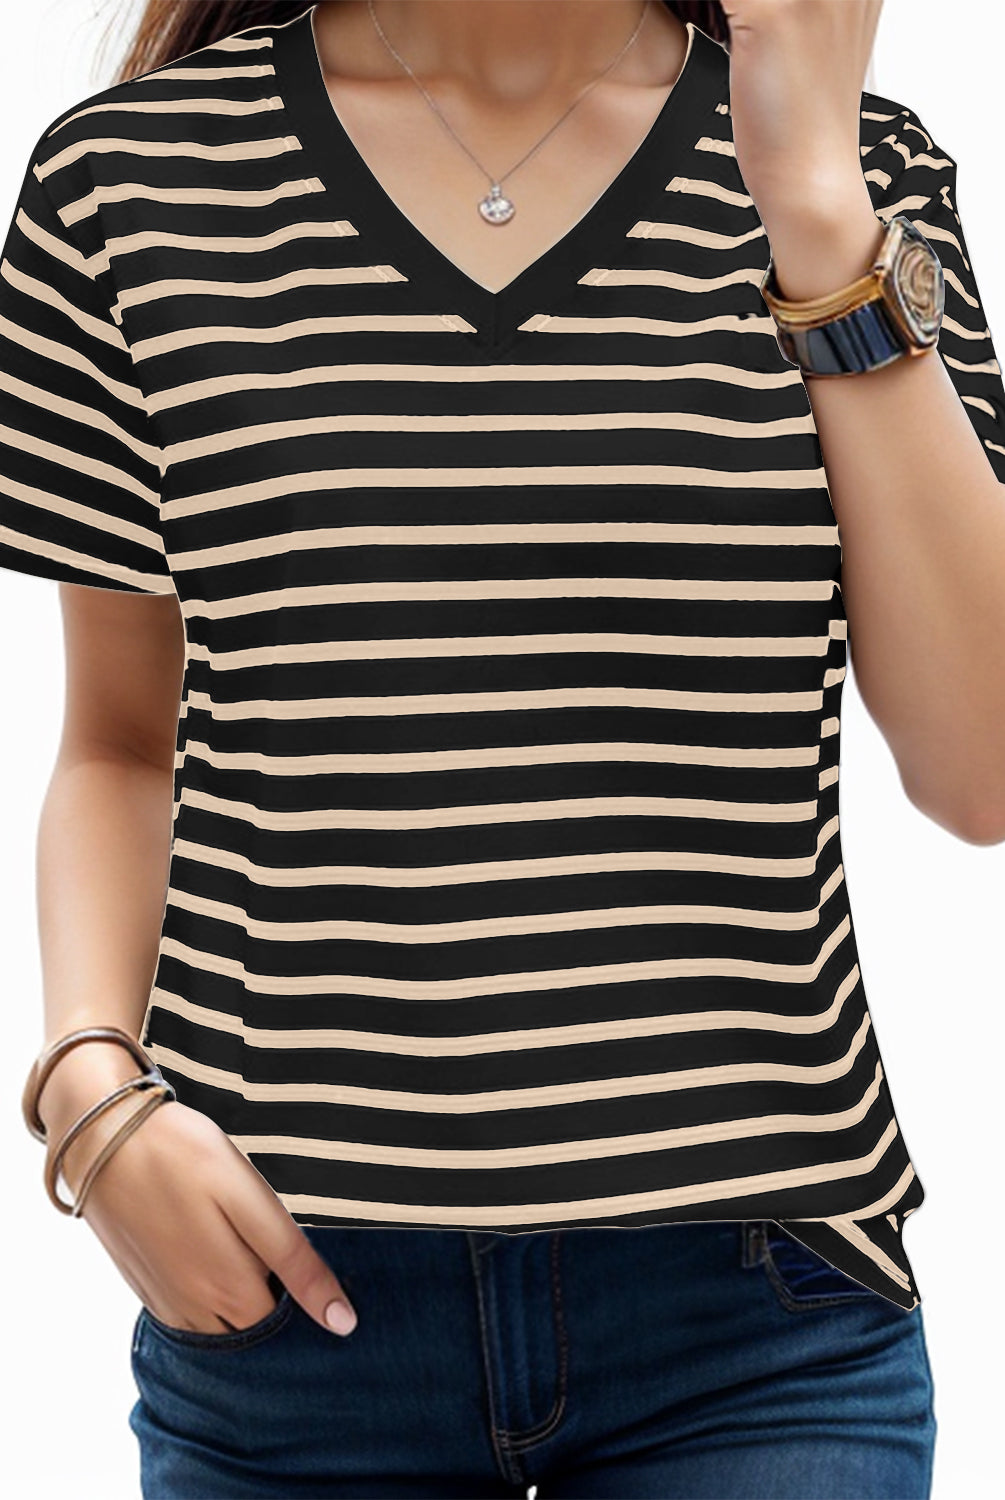 Tan Plus Size Striped V-Neck Short Sleeve T-Shirt Vacation